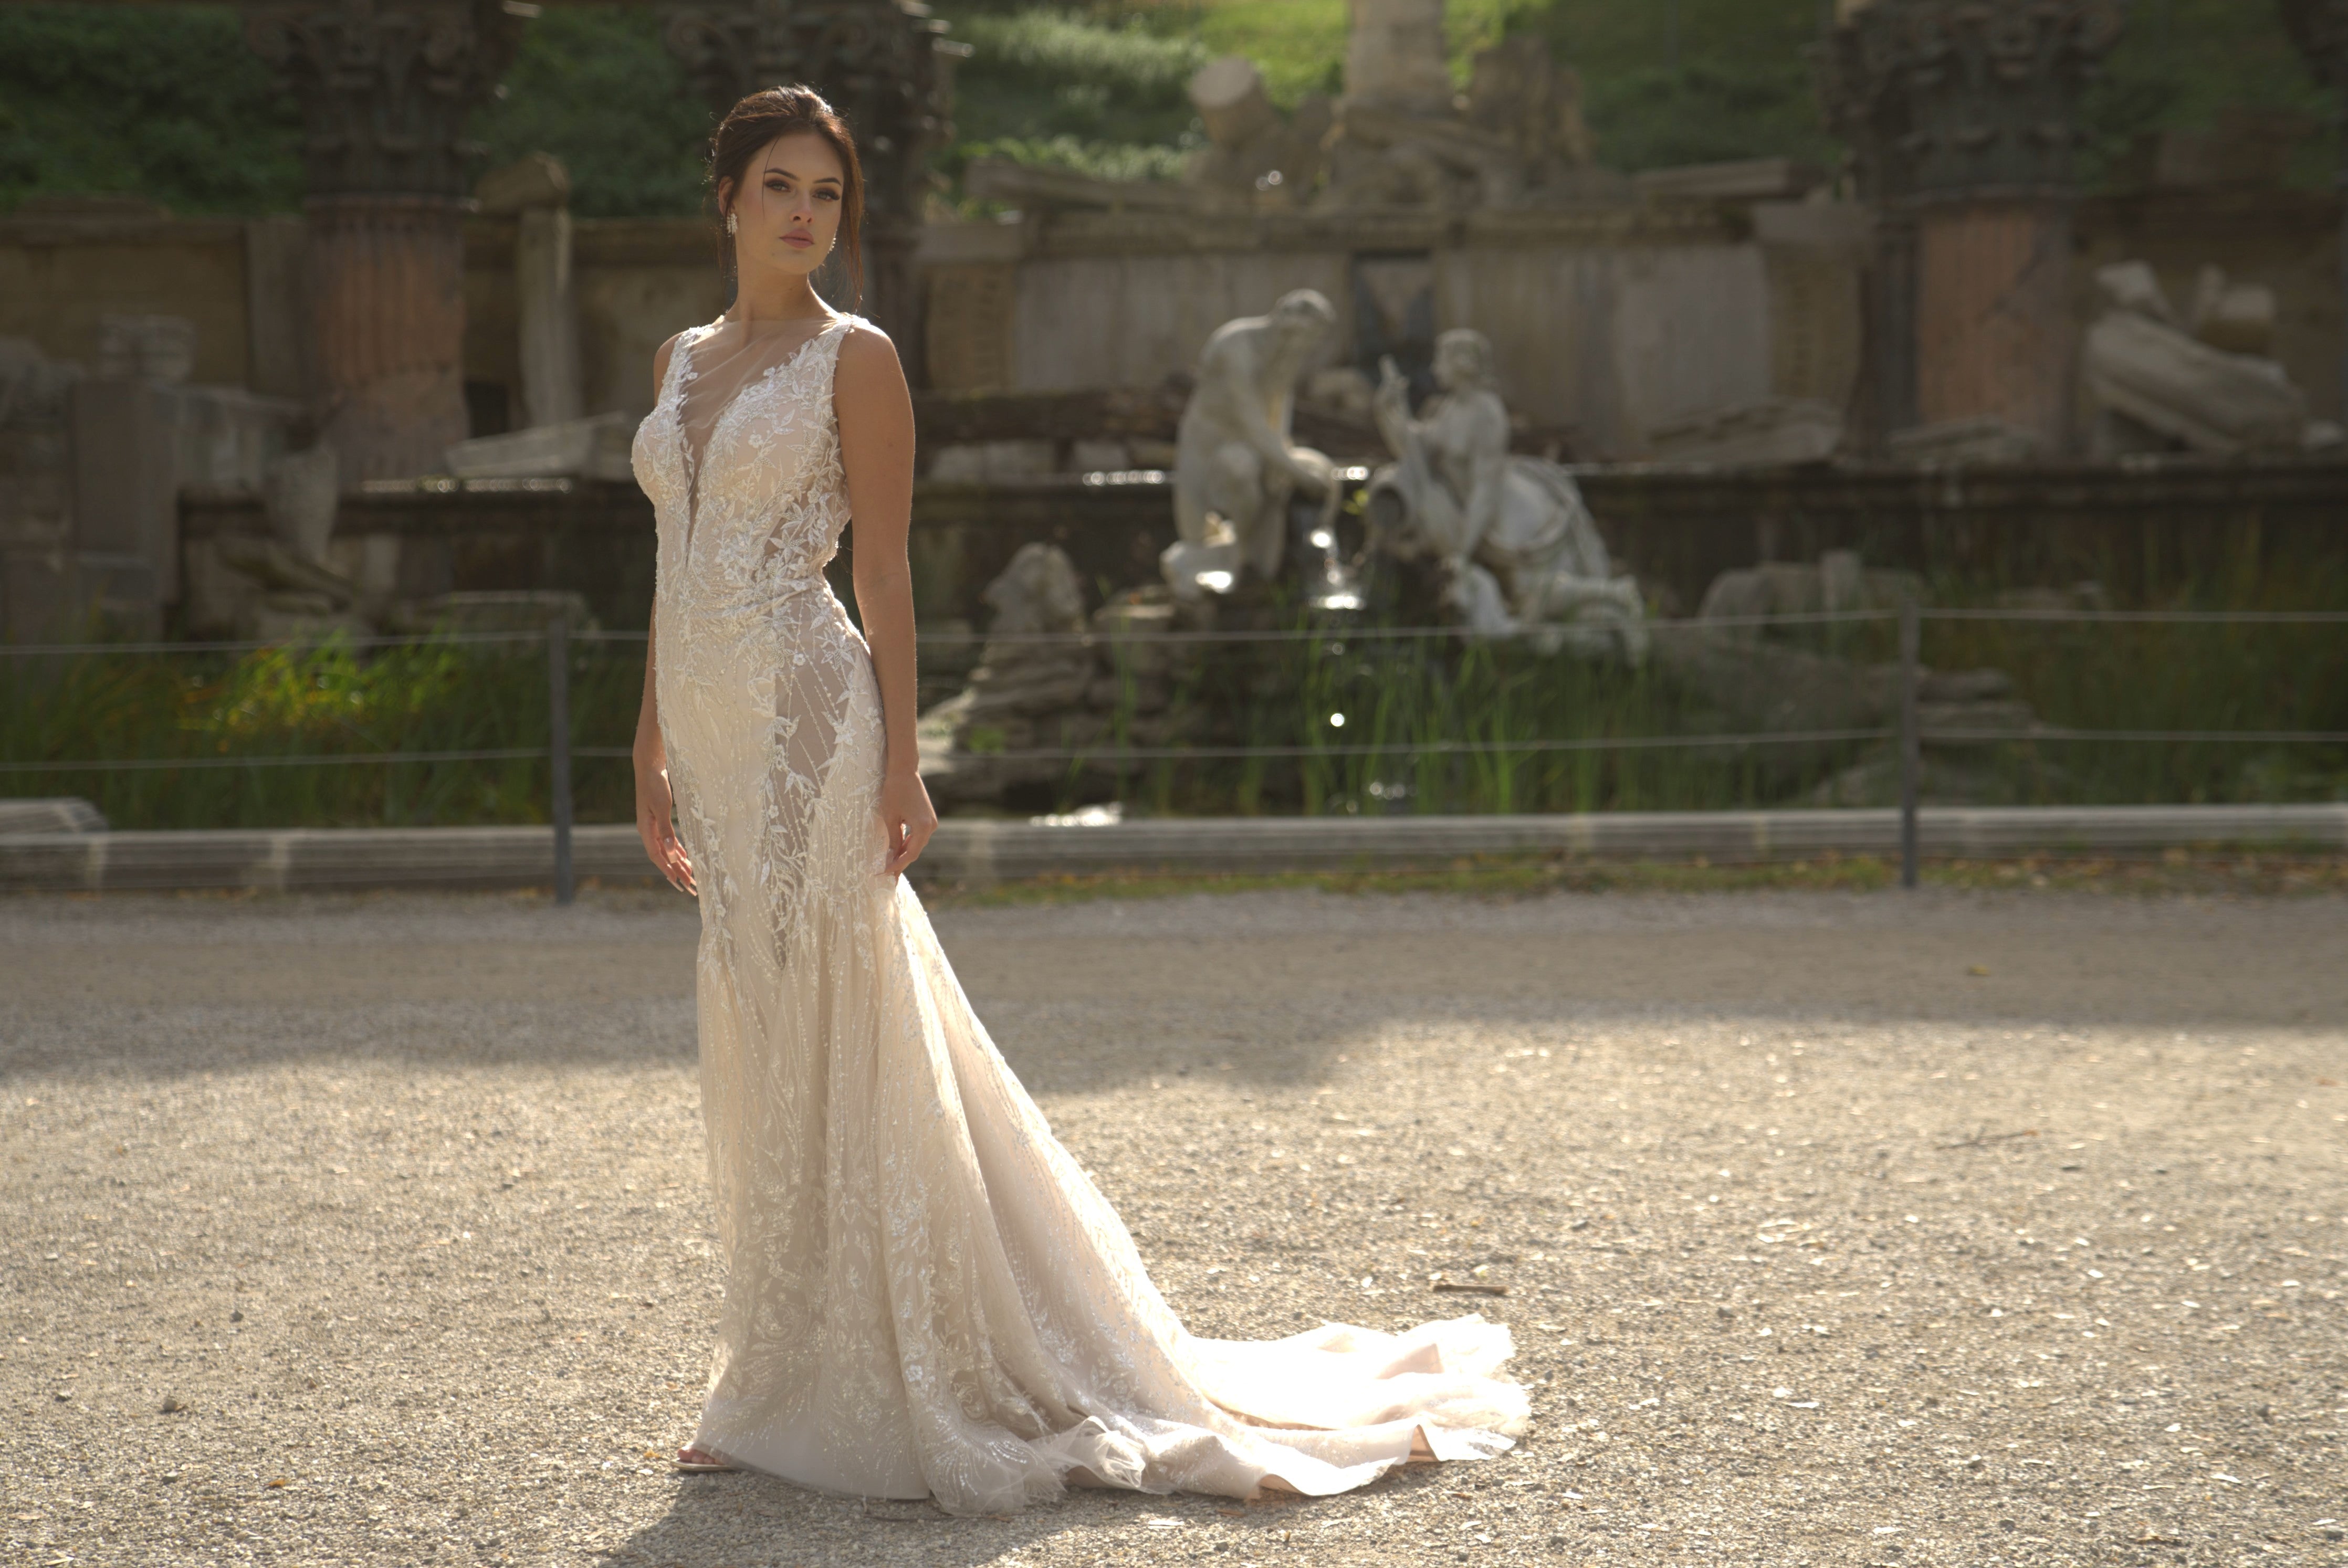 Claudia - Lace Sheath Wedding Dress with Illusion Back - Maxima Bridal